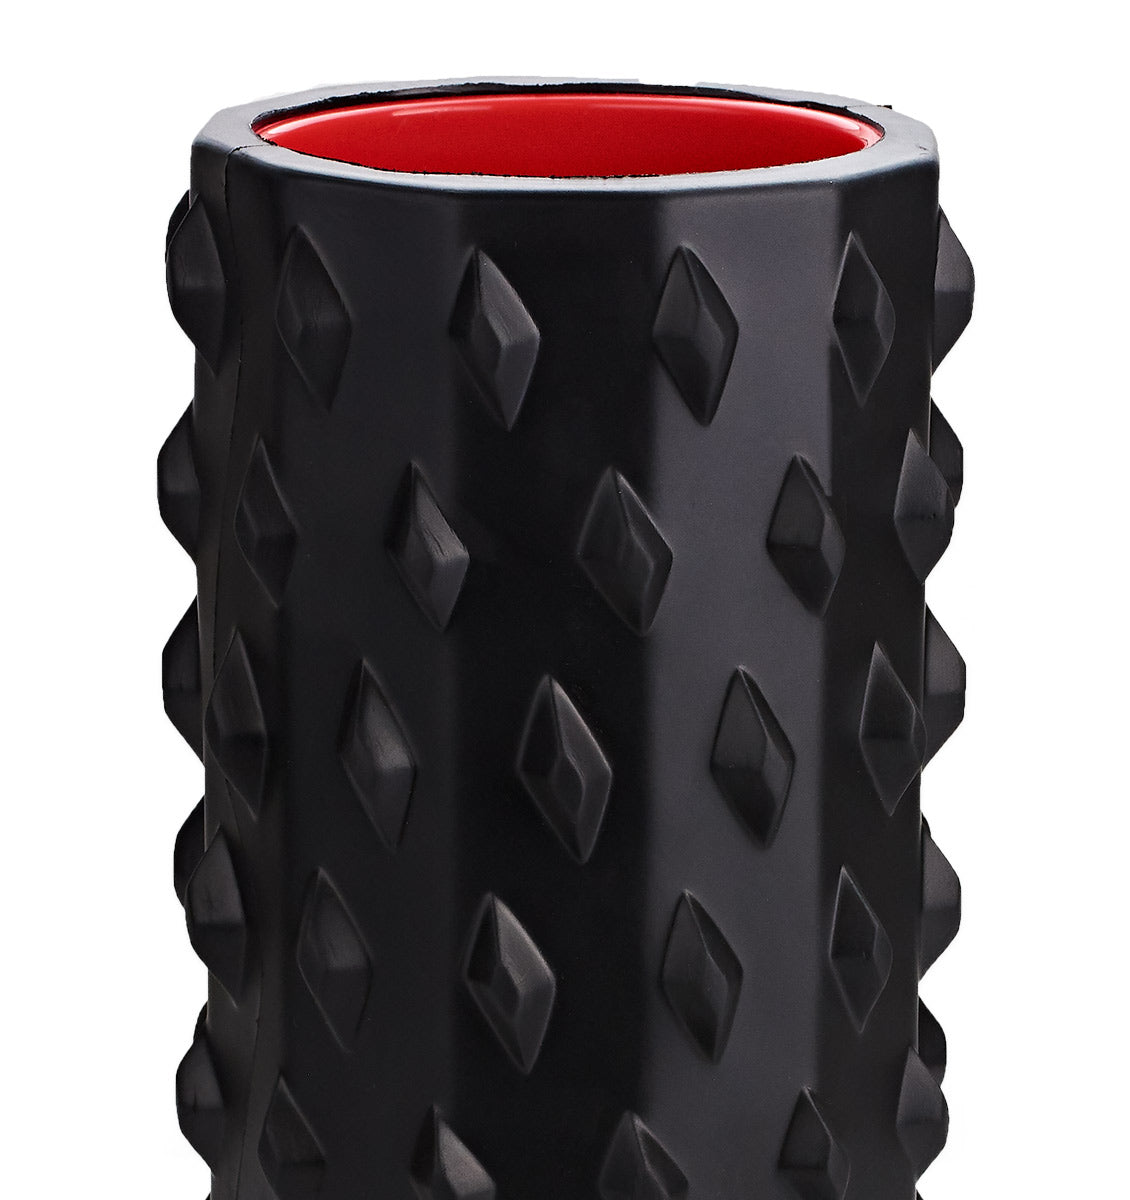 TriggerPoint Carbon Foam Roller - 13" - Top Close Up